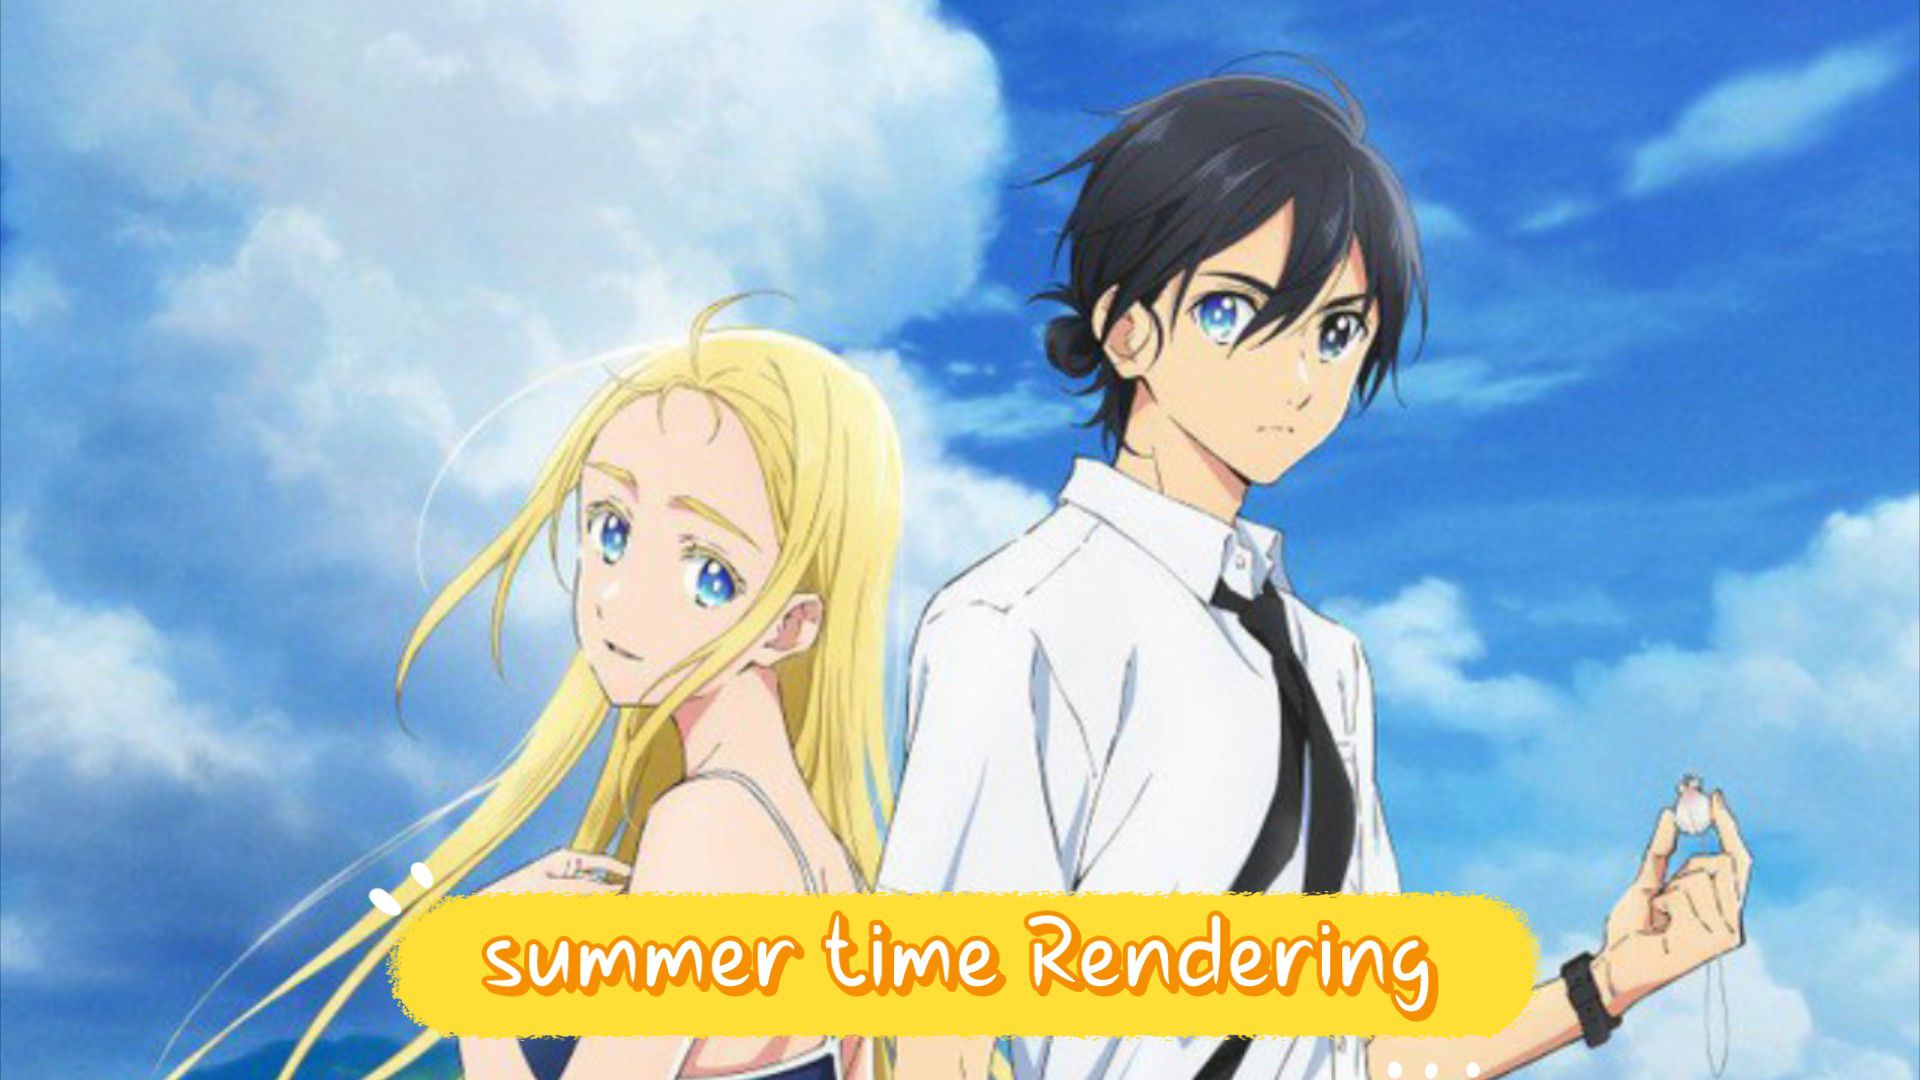 Summertime Rendering episode 23: Shide takes the battle to Tokoyo